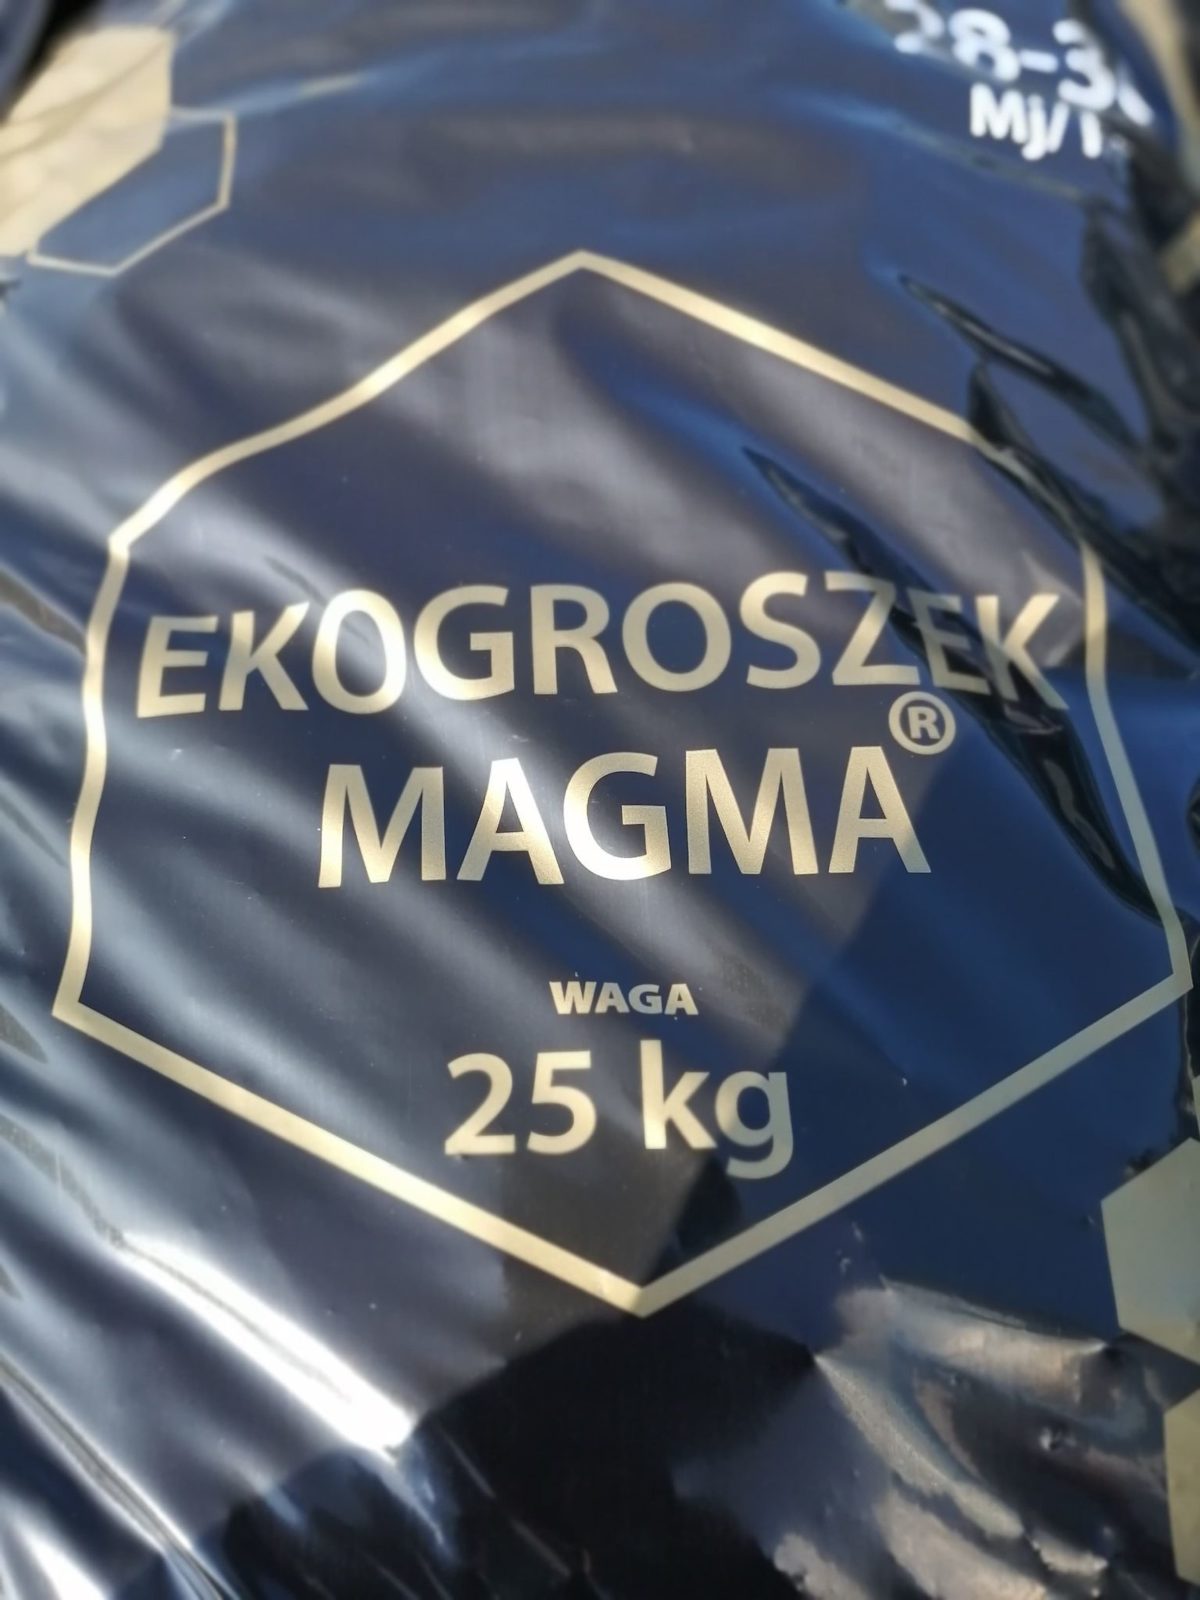 Ekogroszek Magma